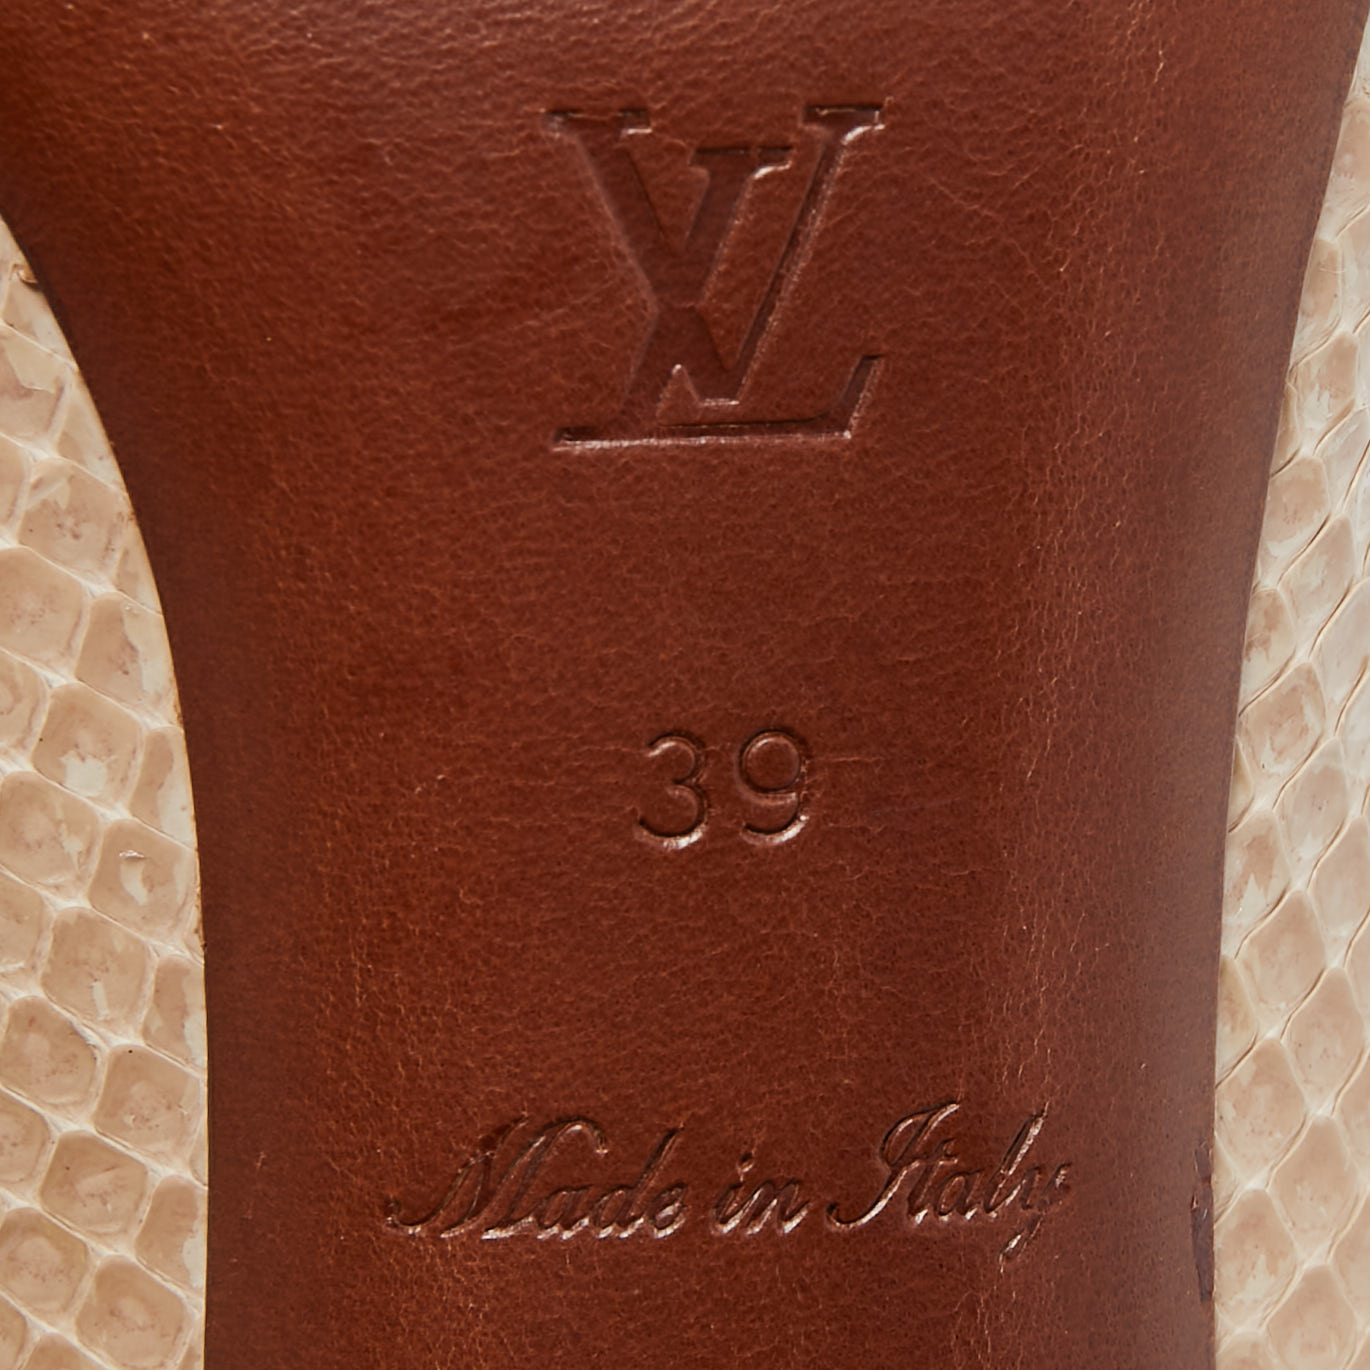 Louis Vuitton Two Tone Python Eyeline Pumps Size 39